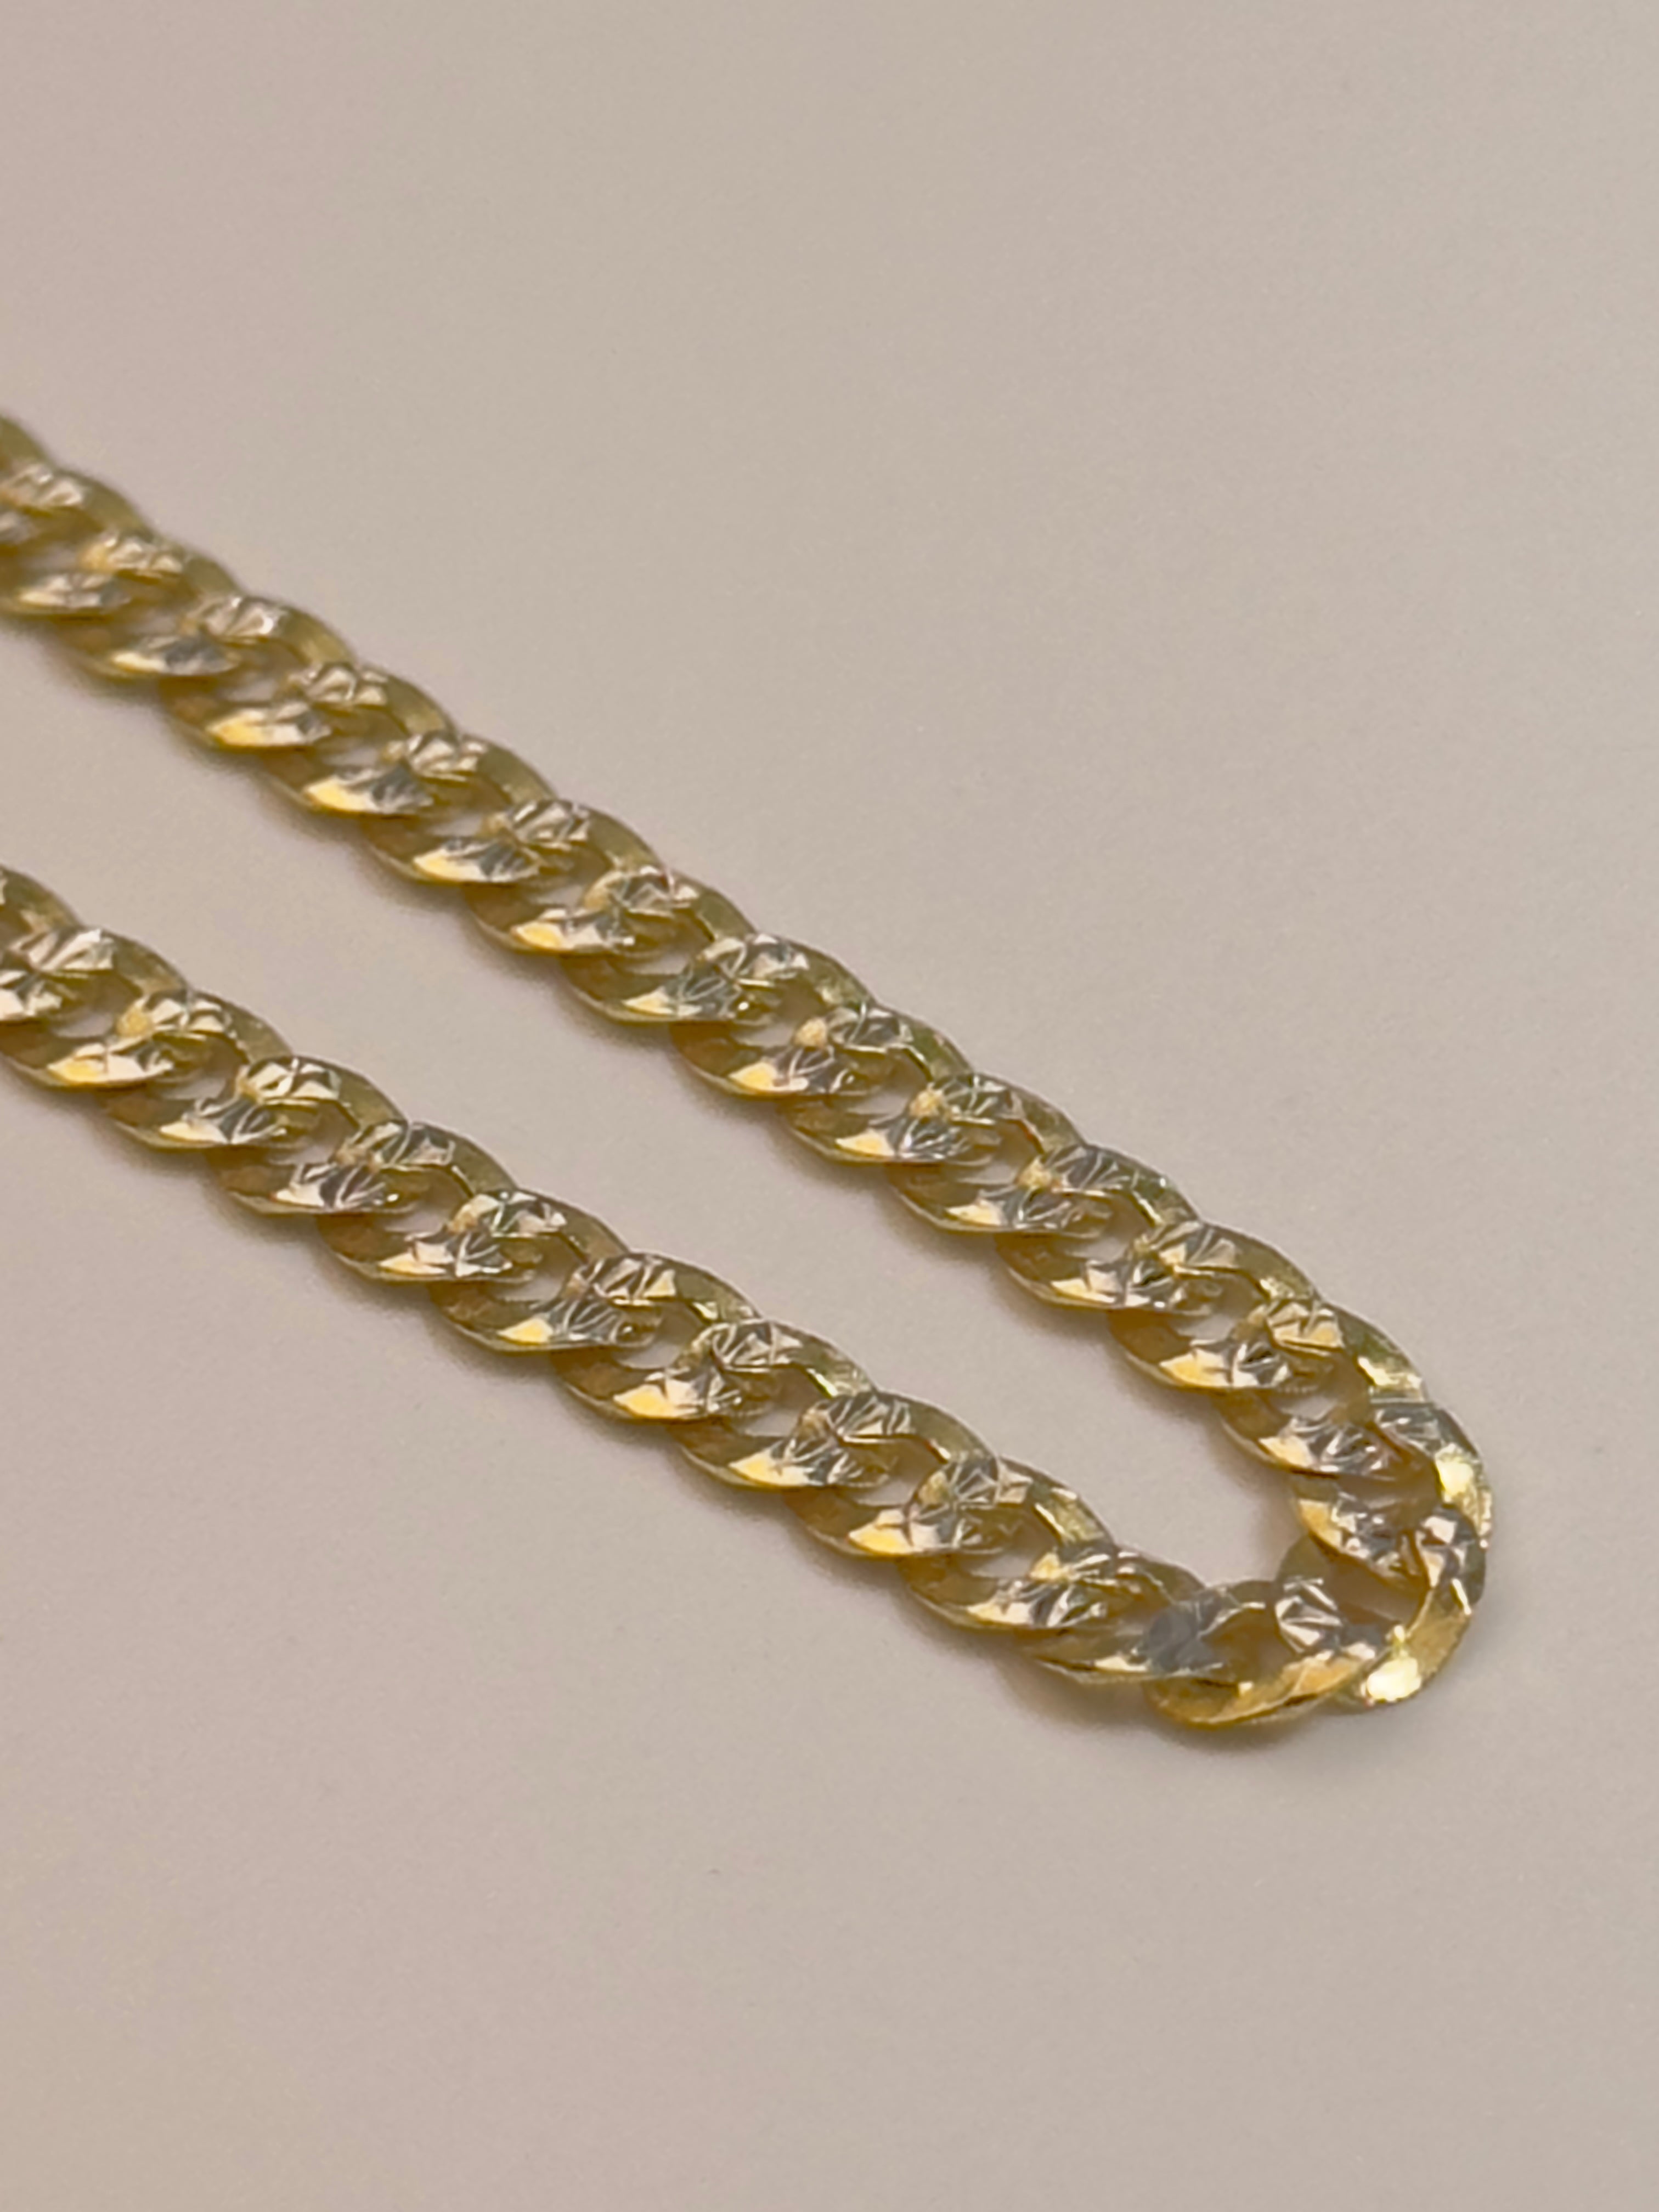 DR1653 - 925 Sterling Silver,14K YG Bonded - Men's Gold Chains - Cuban w/ Diamond Cut